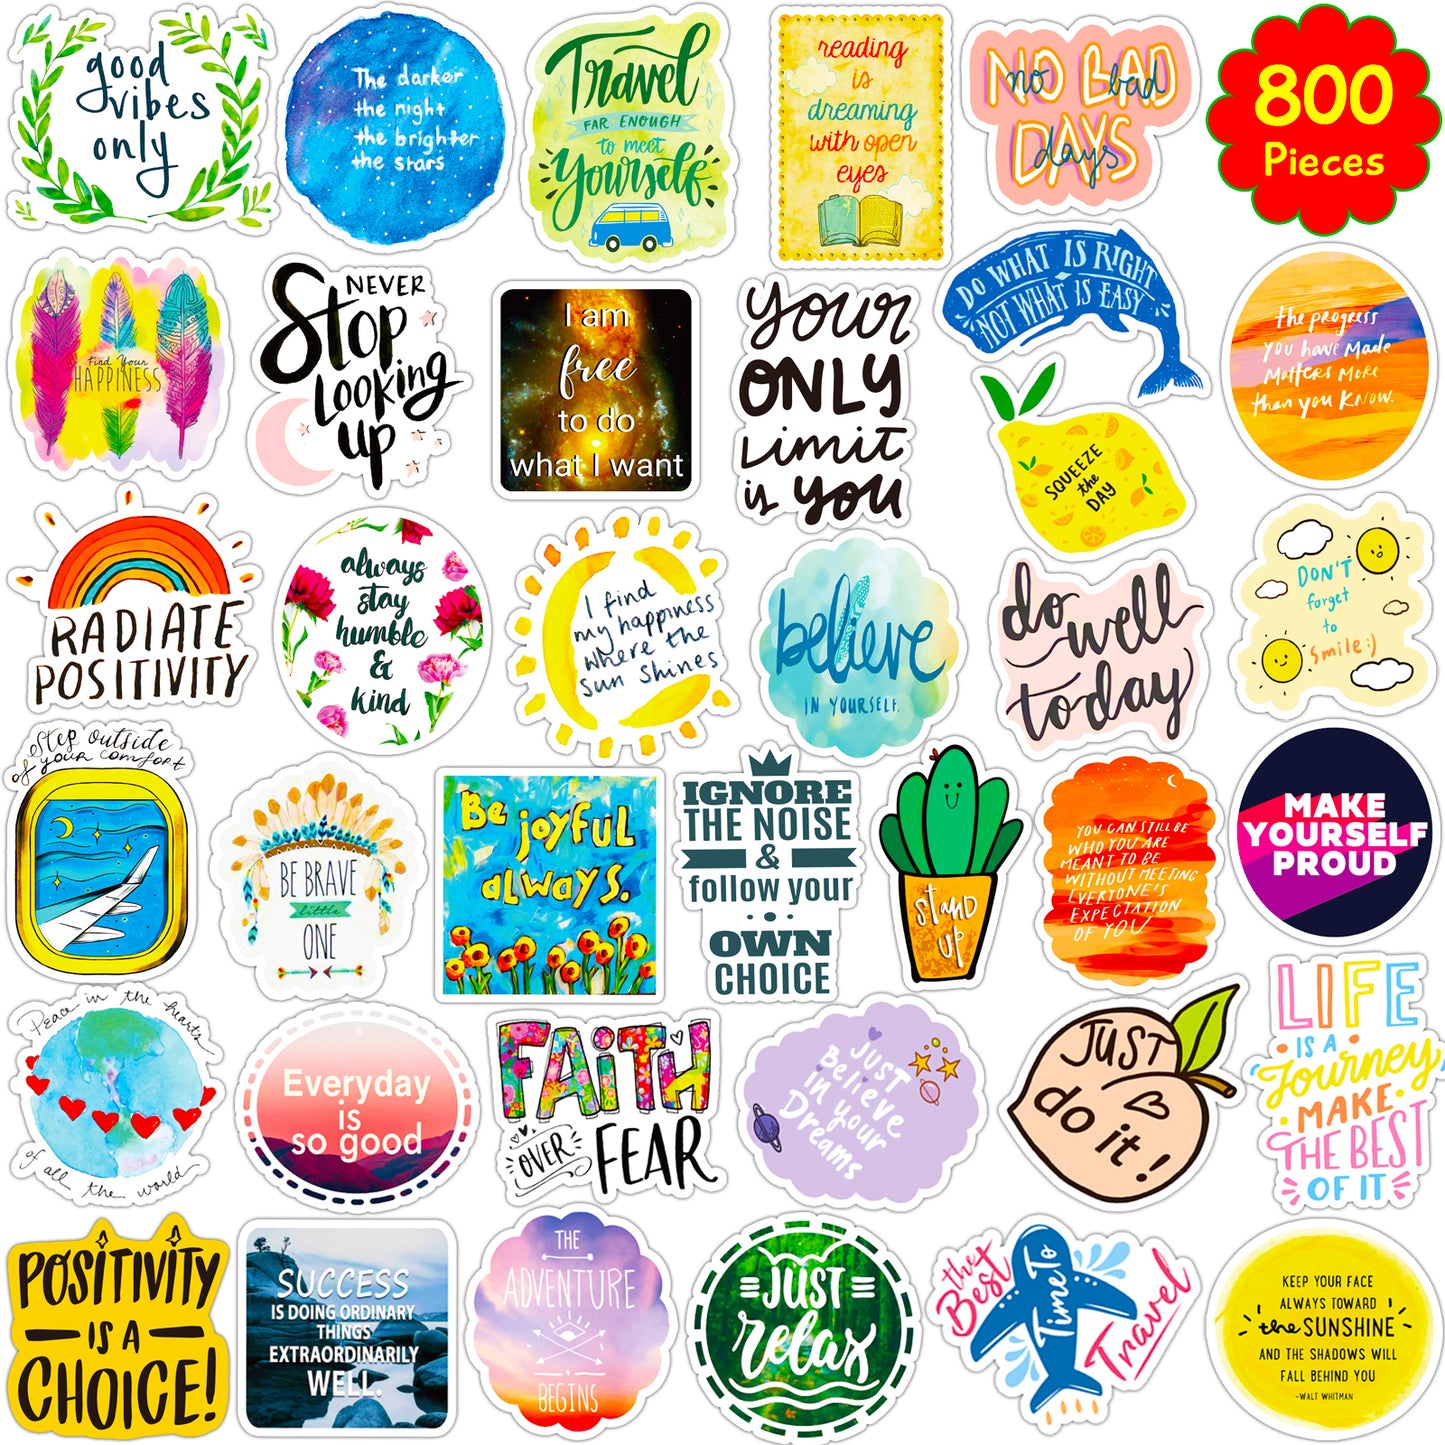 School Stickers Teachers Sticker Positive Stickers Encouraging Stickers 